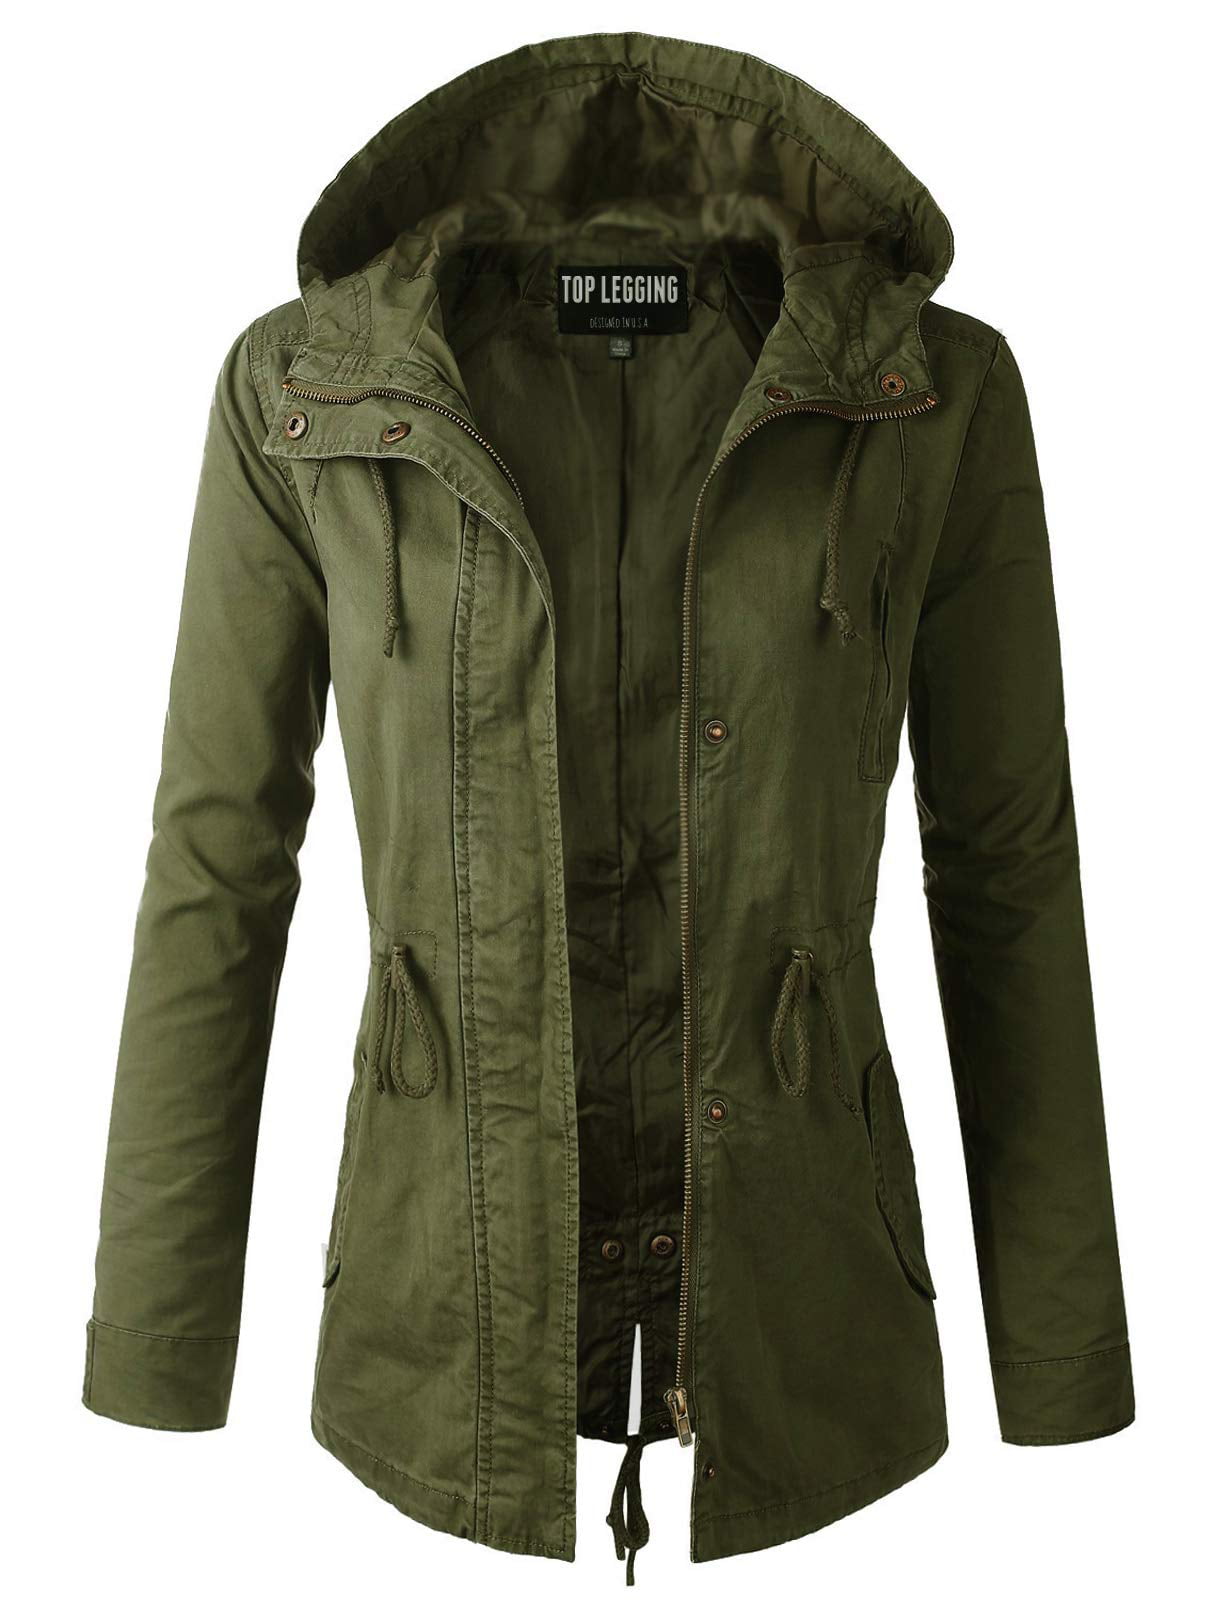 Ambiance Coats & Jackets - Womens Jacket Army Large Military Utility